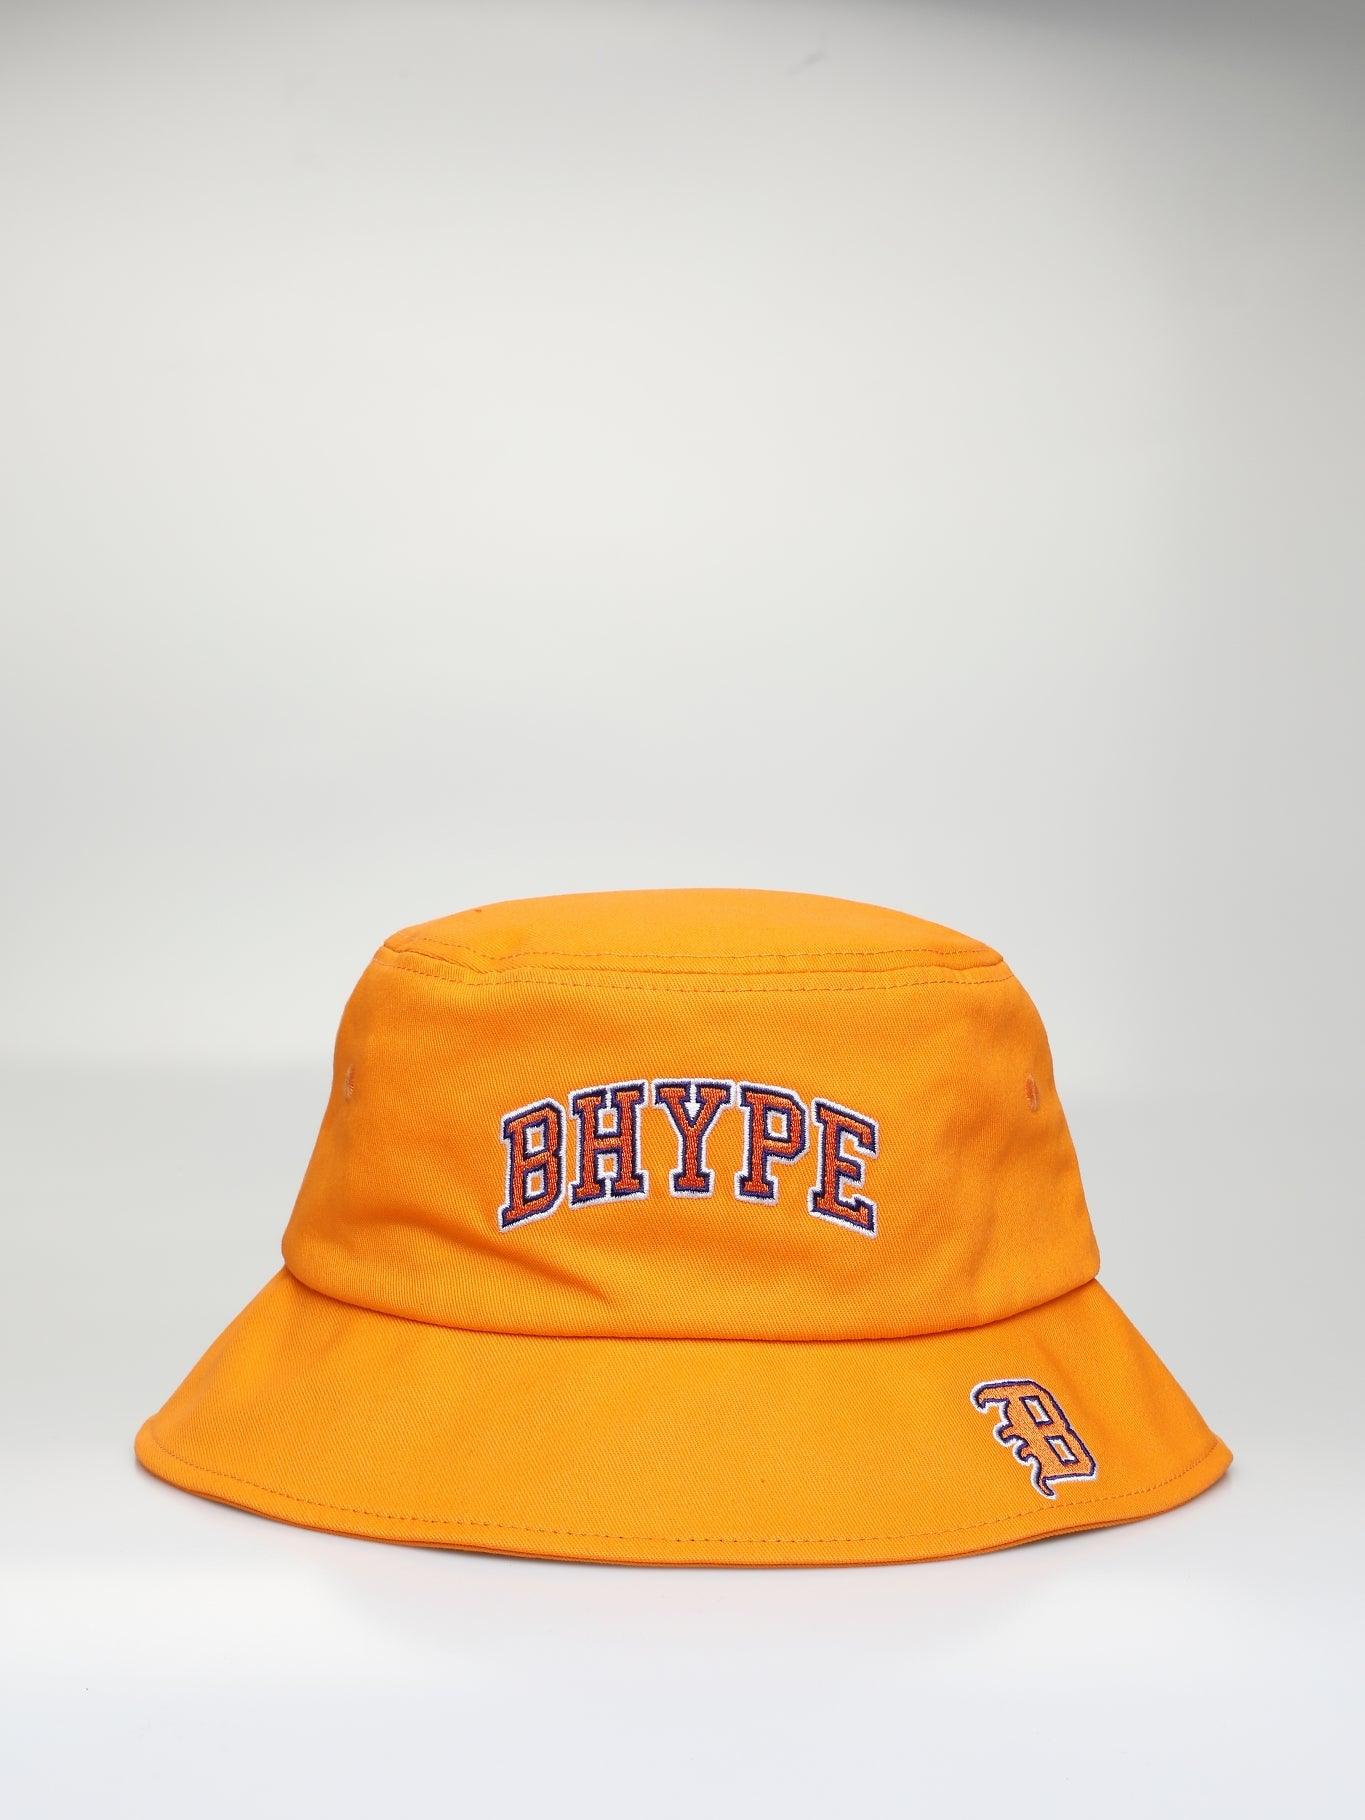 BHYPE ORANGE BUCKET HAT - B-Hype Society